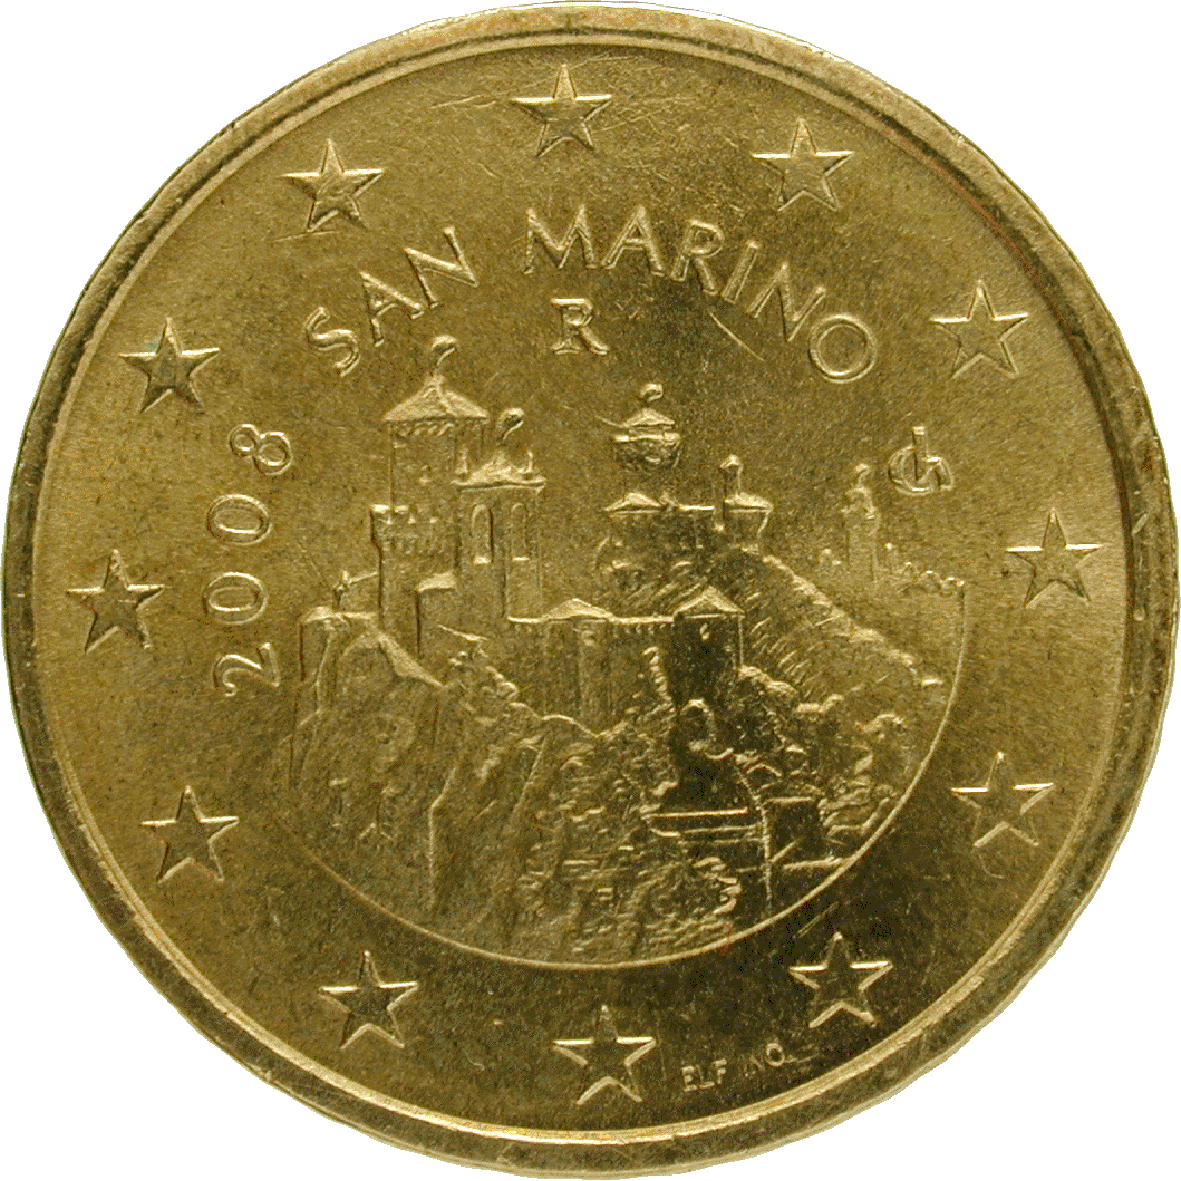 Republik San Marino, 50 Eurocent 2008 (reverse)